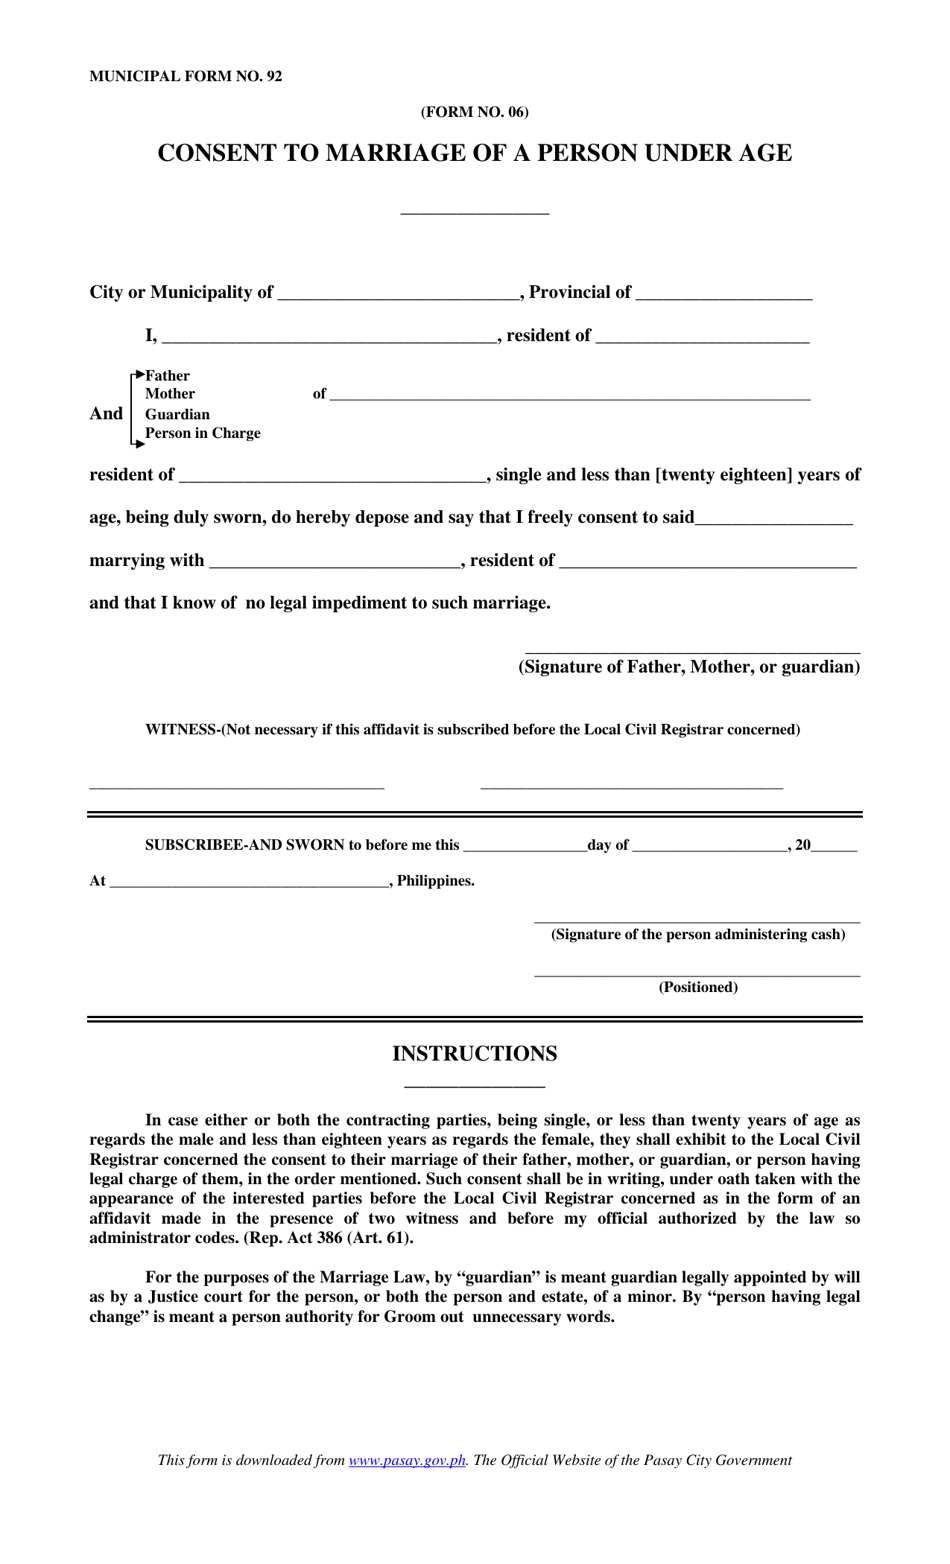 form-06-municipal-form-92-download-printable-pdf-or-fill-online